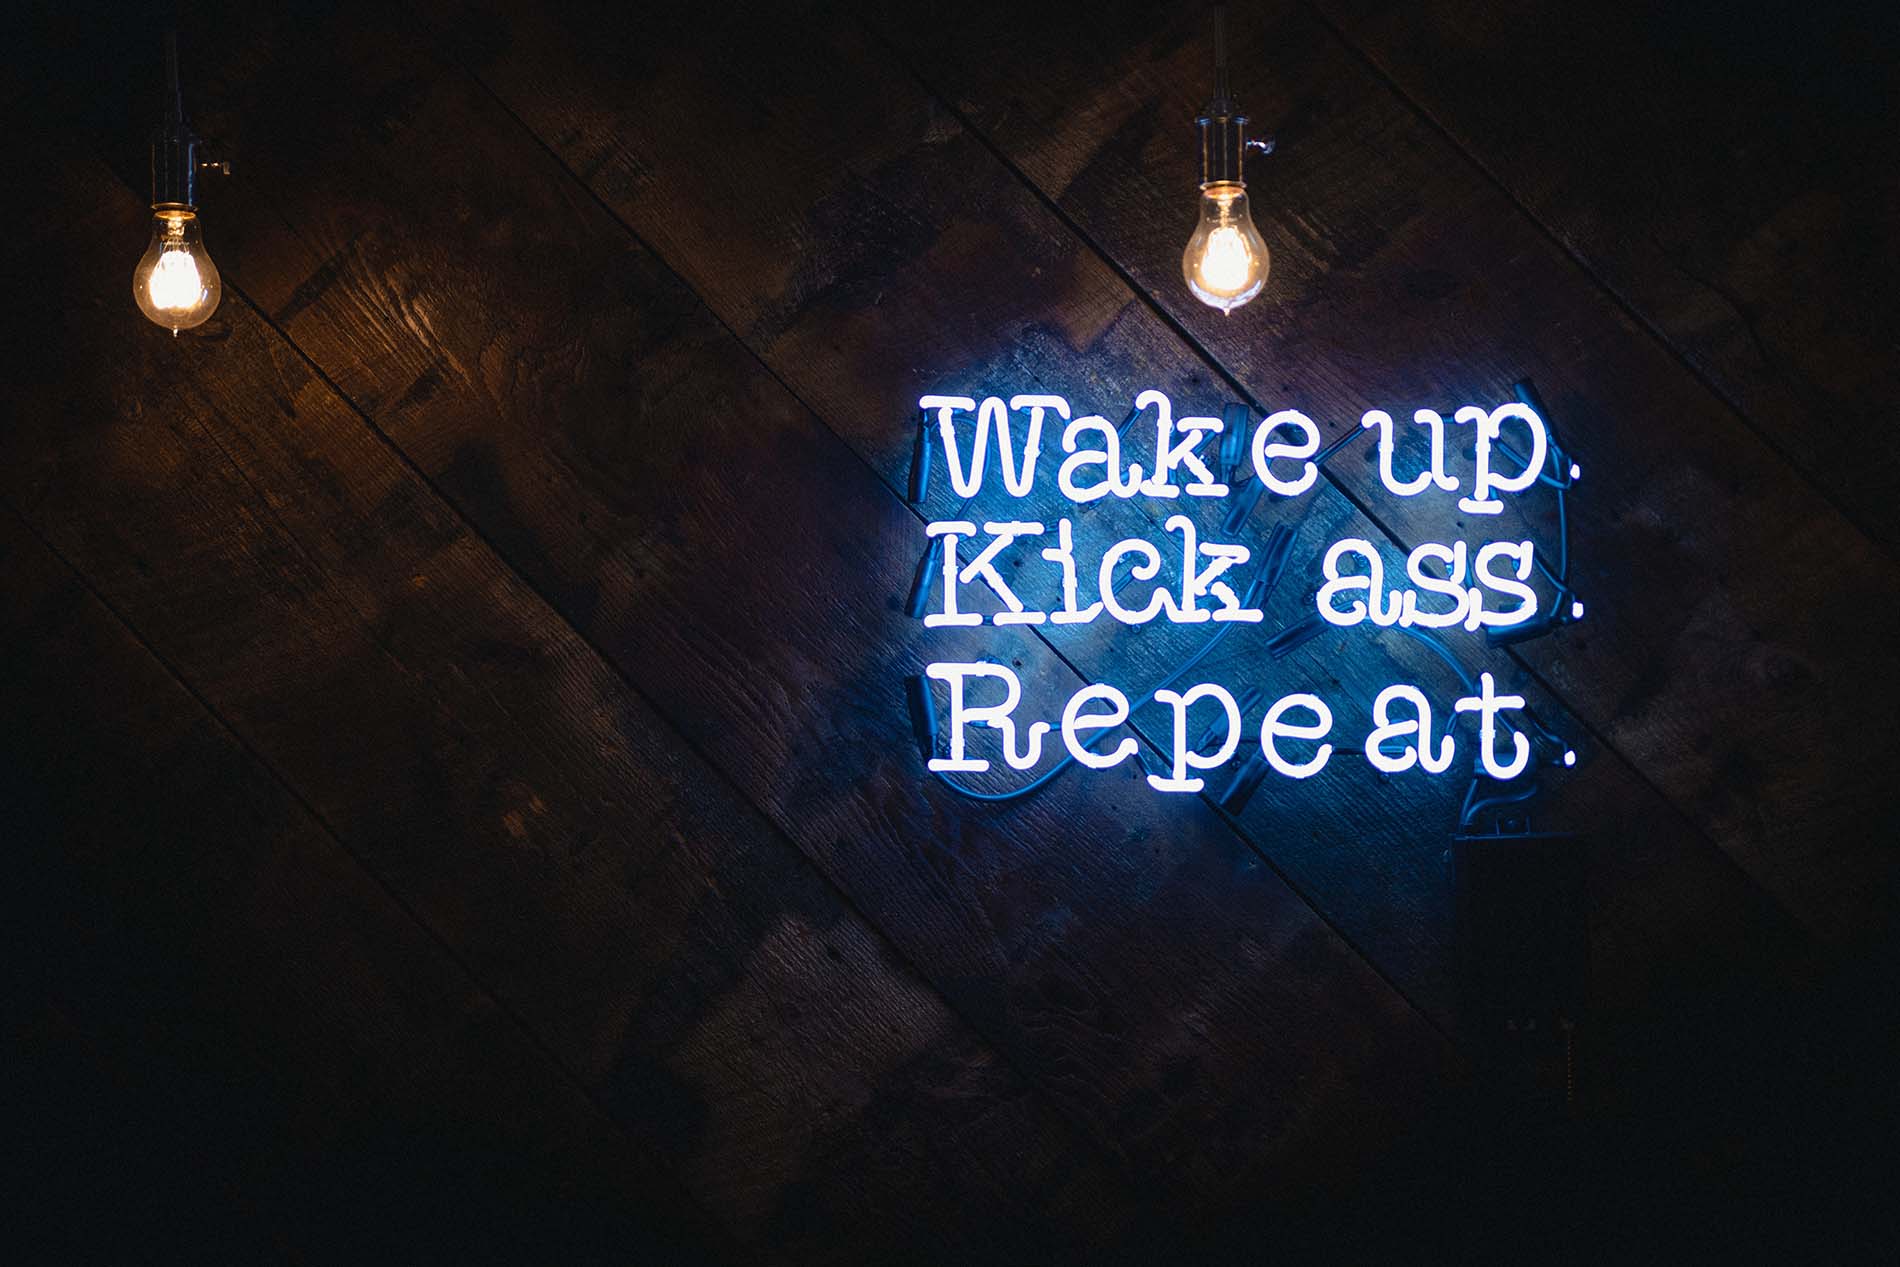 "Wake up, kick ass, repeat." Photo by Justin Veenema/Unsplash.